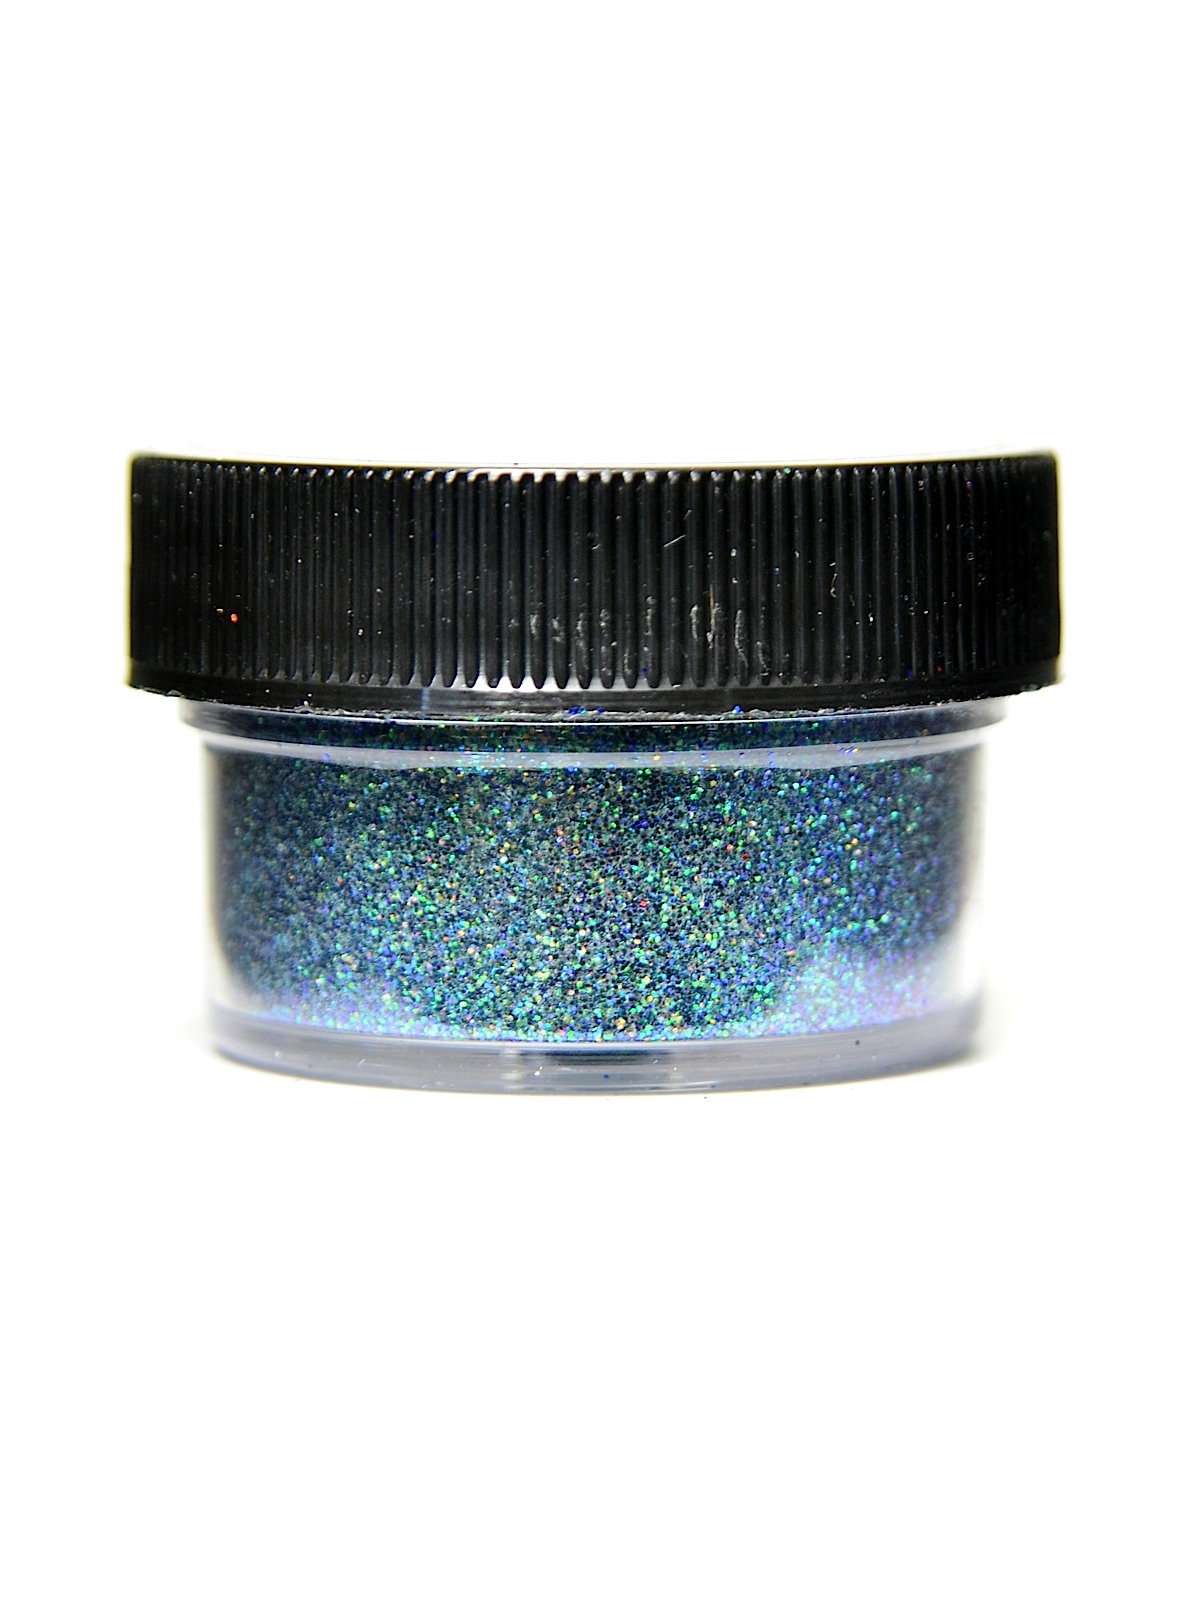 Ultrafine Transparent Glitter Tide Pool 1 2 Oz. Jar